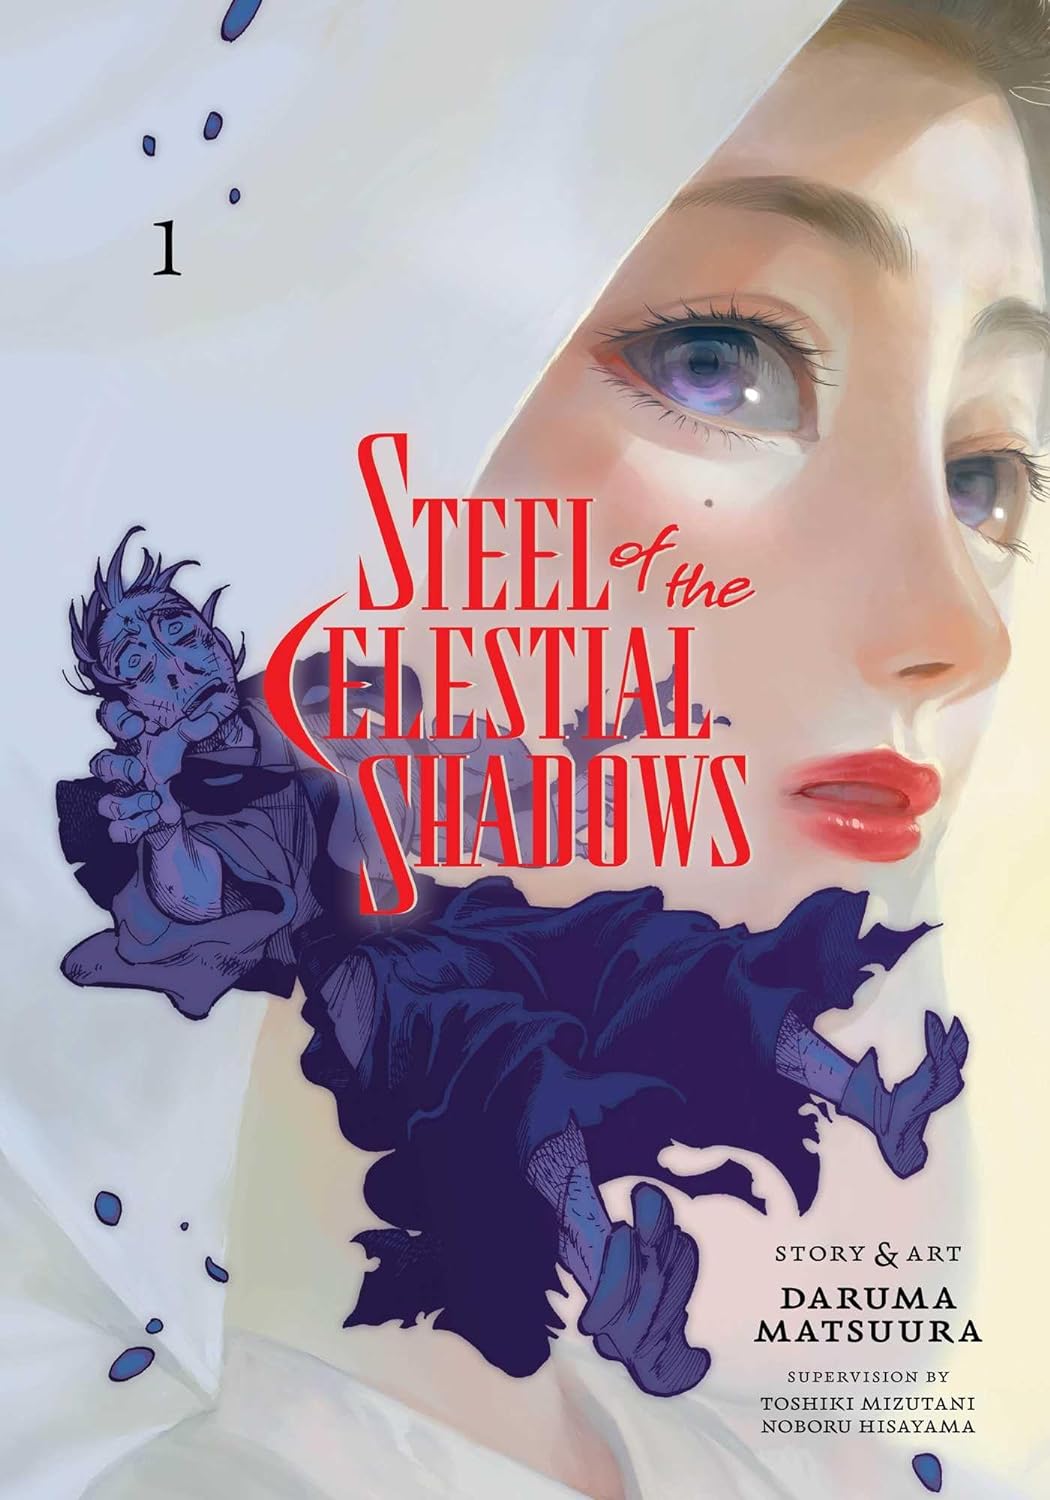 Steel of the Celestial Shadows Vol. 01